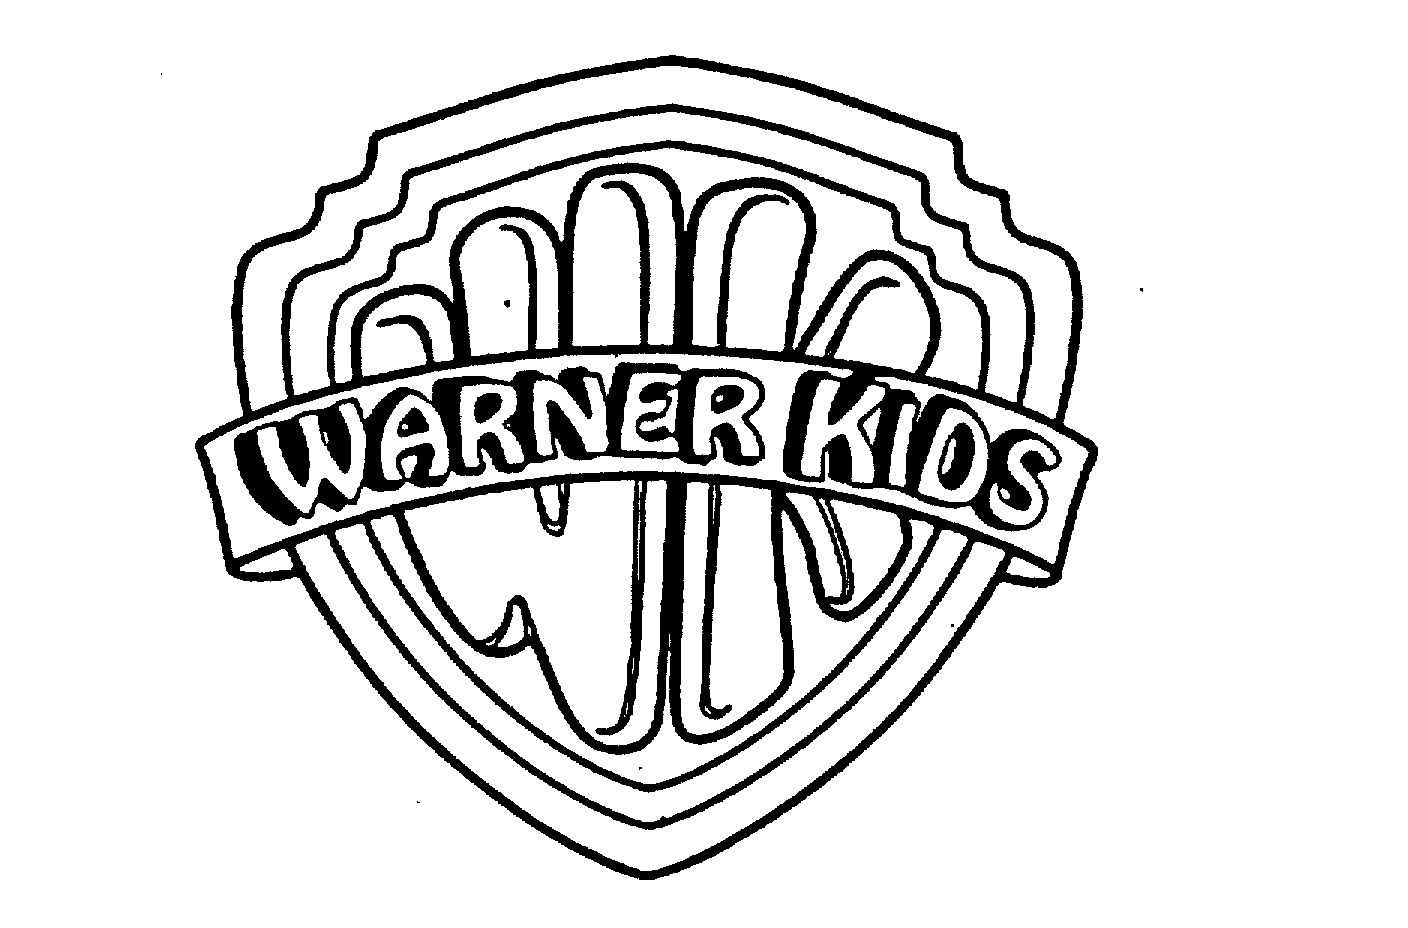 WK WARNER KIDS